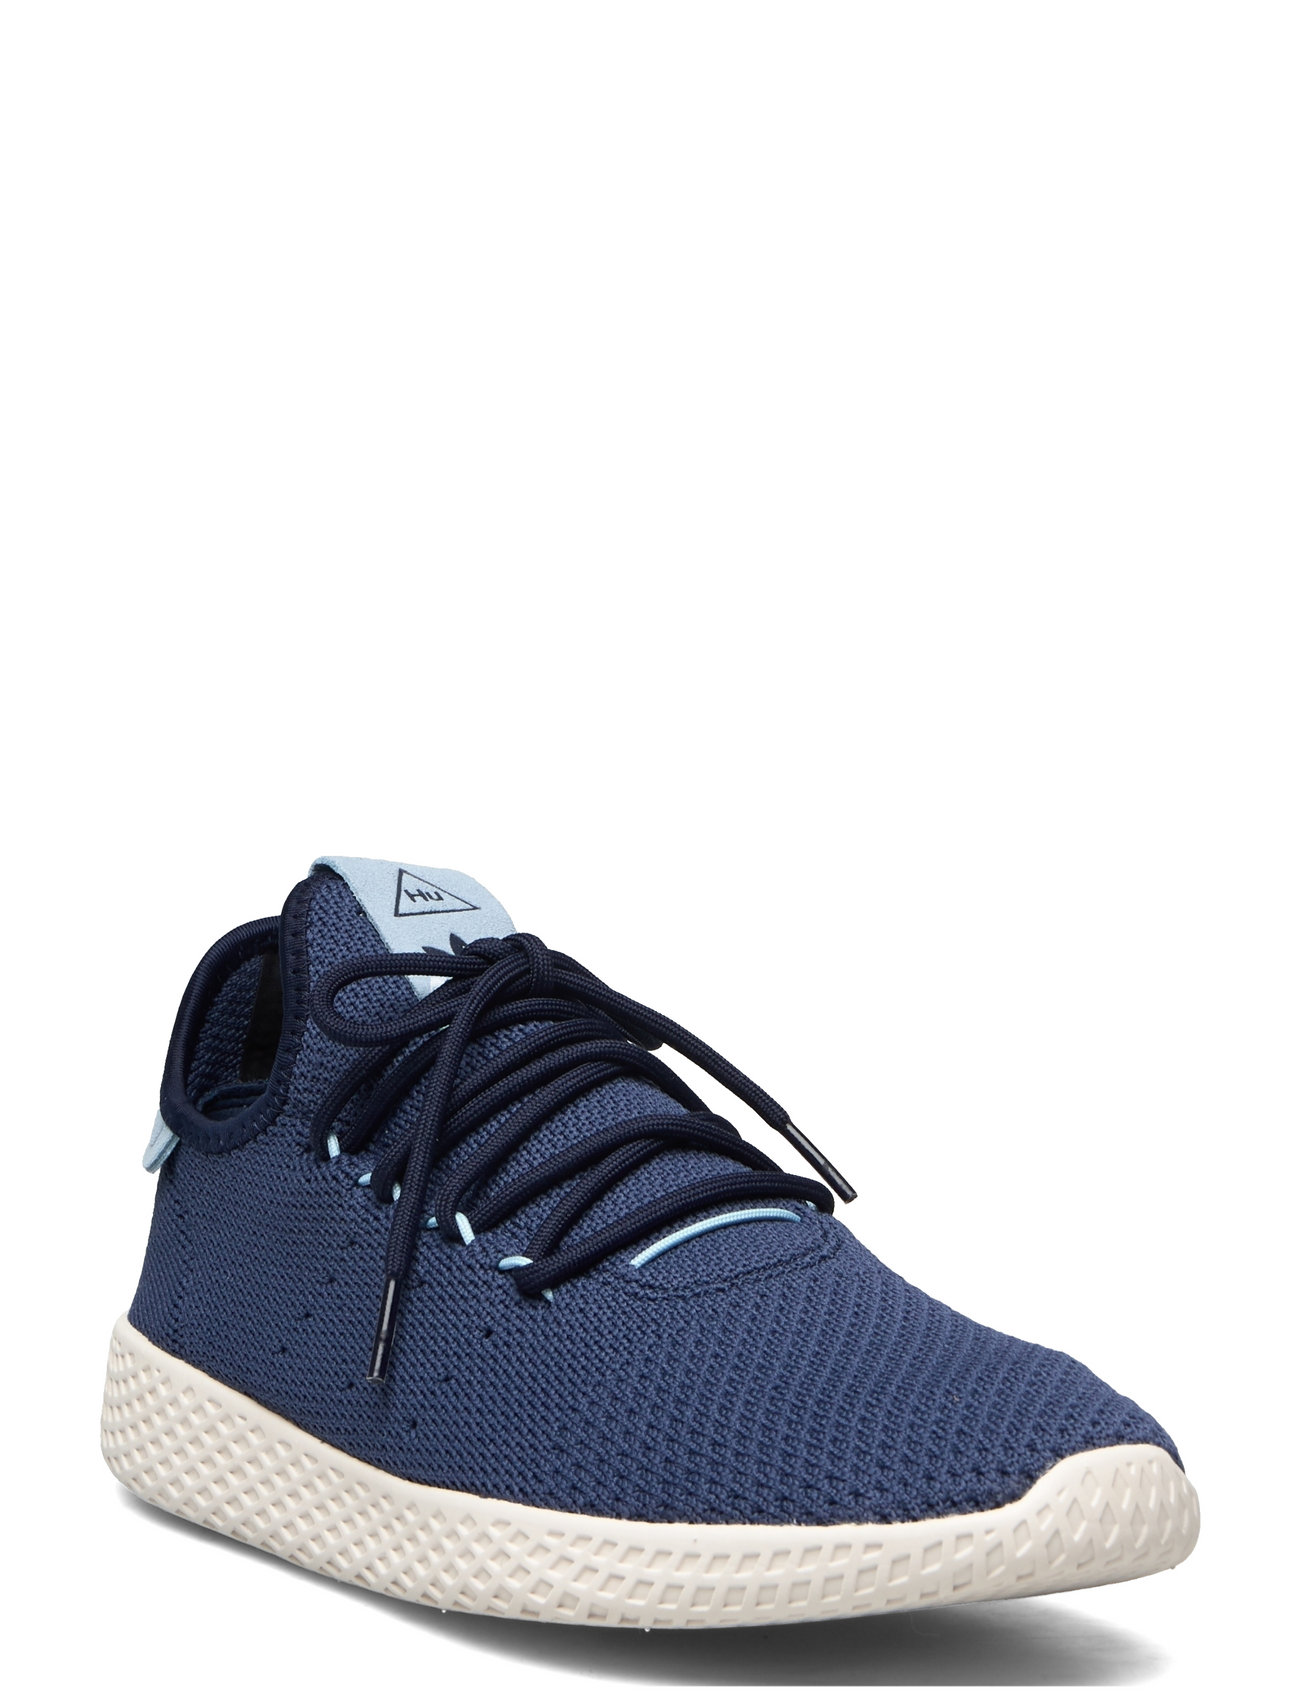 Adidas Pharrell Williams Tennis Hu Sneaker Shoes Blue Men's